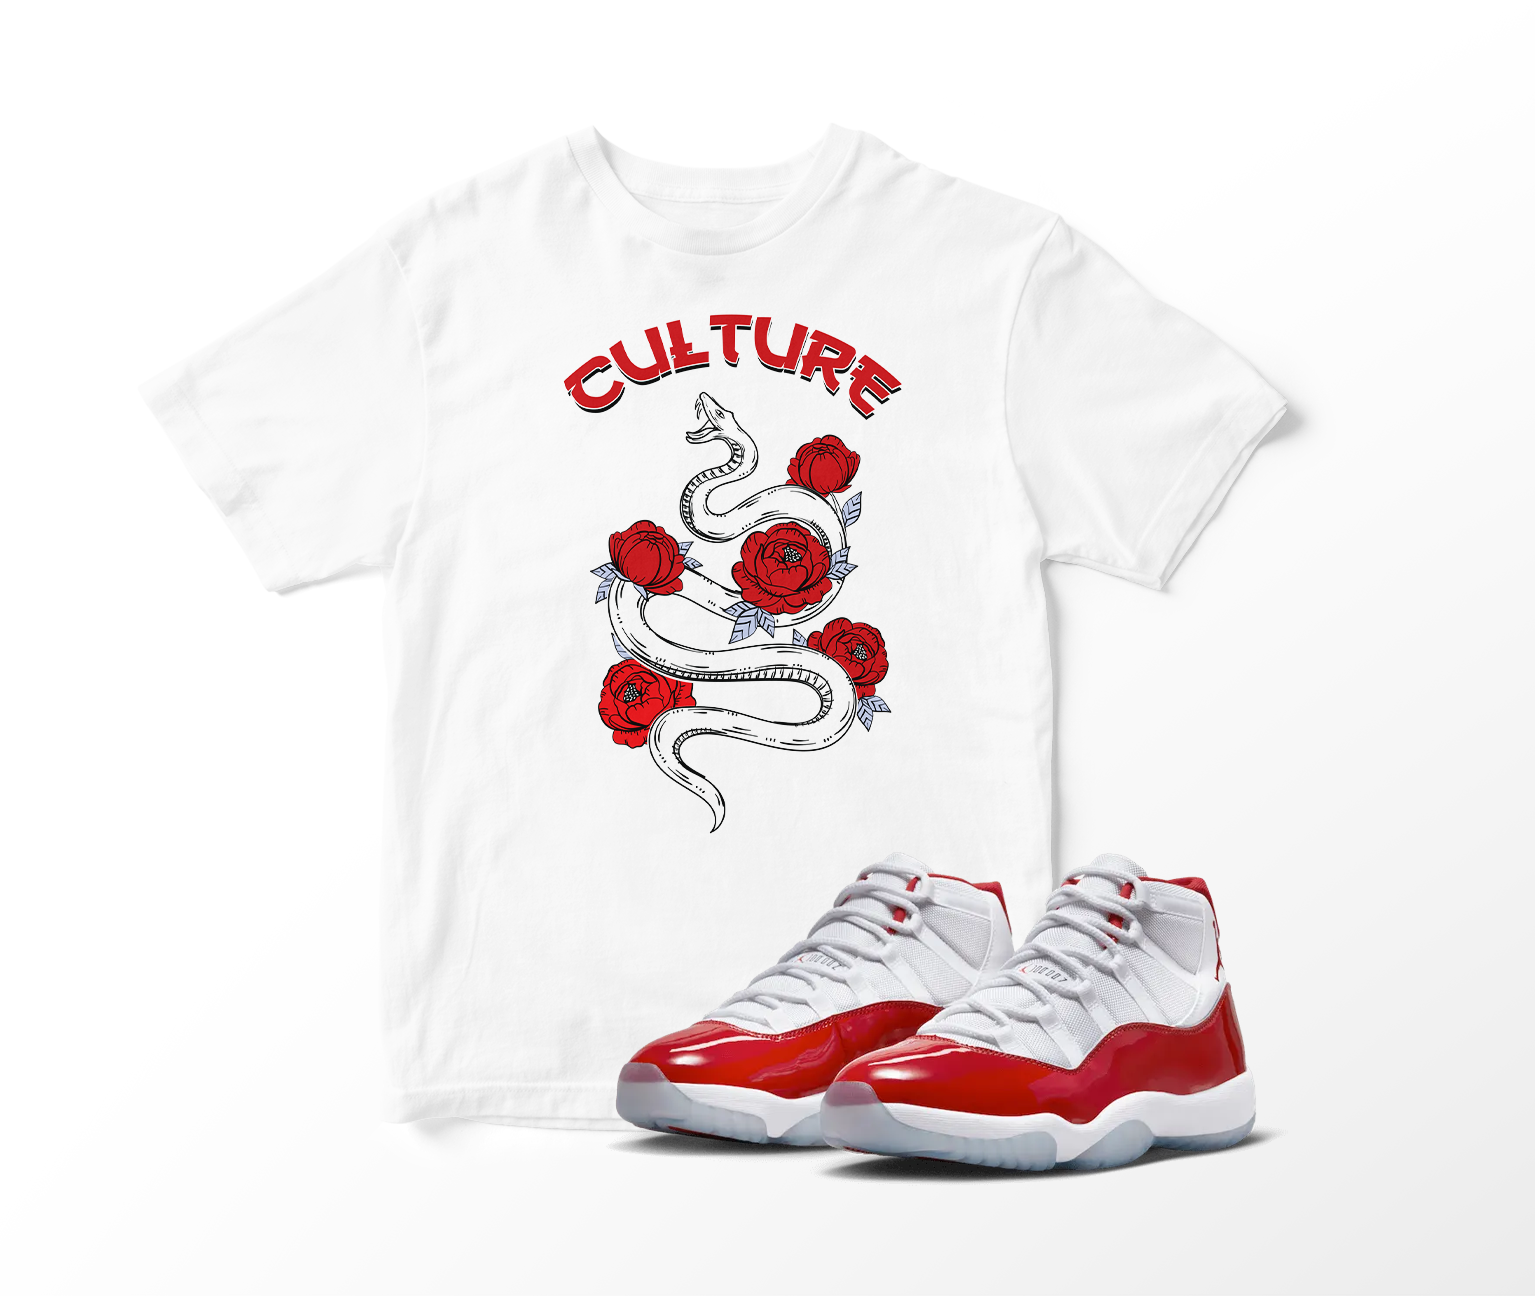 'Culture Snake' Custom Graphic Short Sleeve T-Shirt To Match Air Jordan 11 Cherry Red